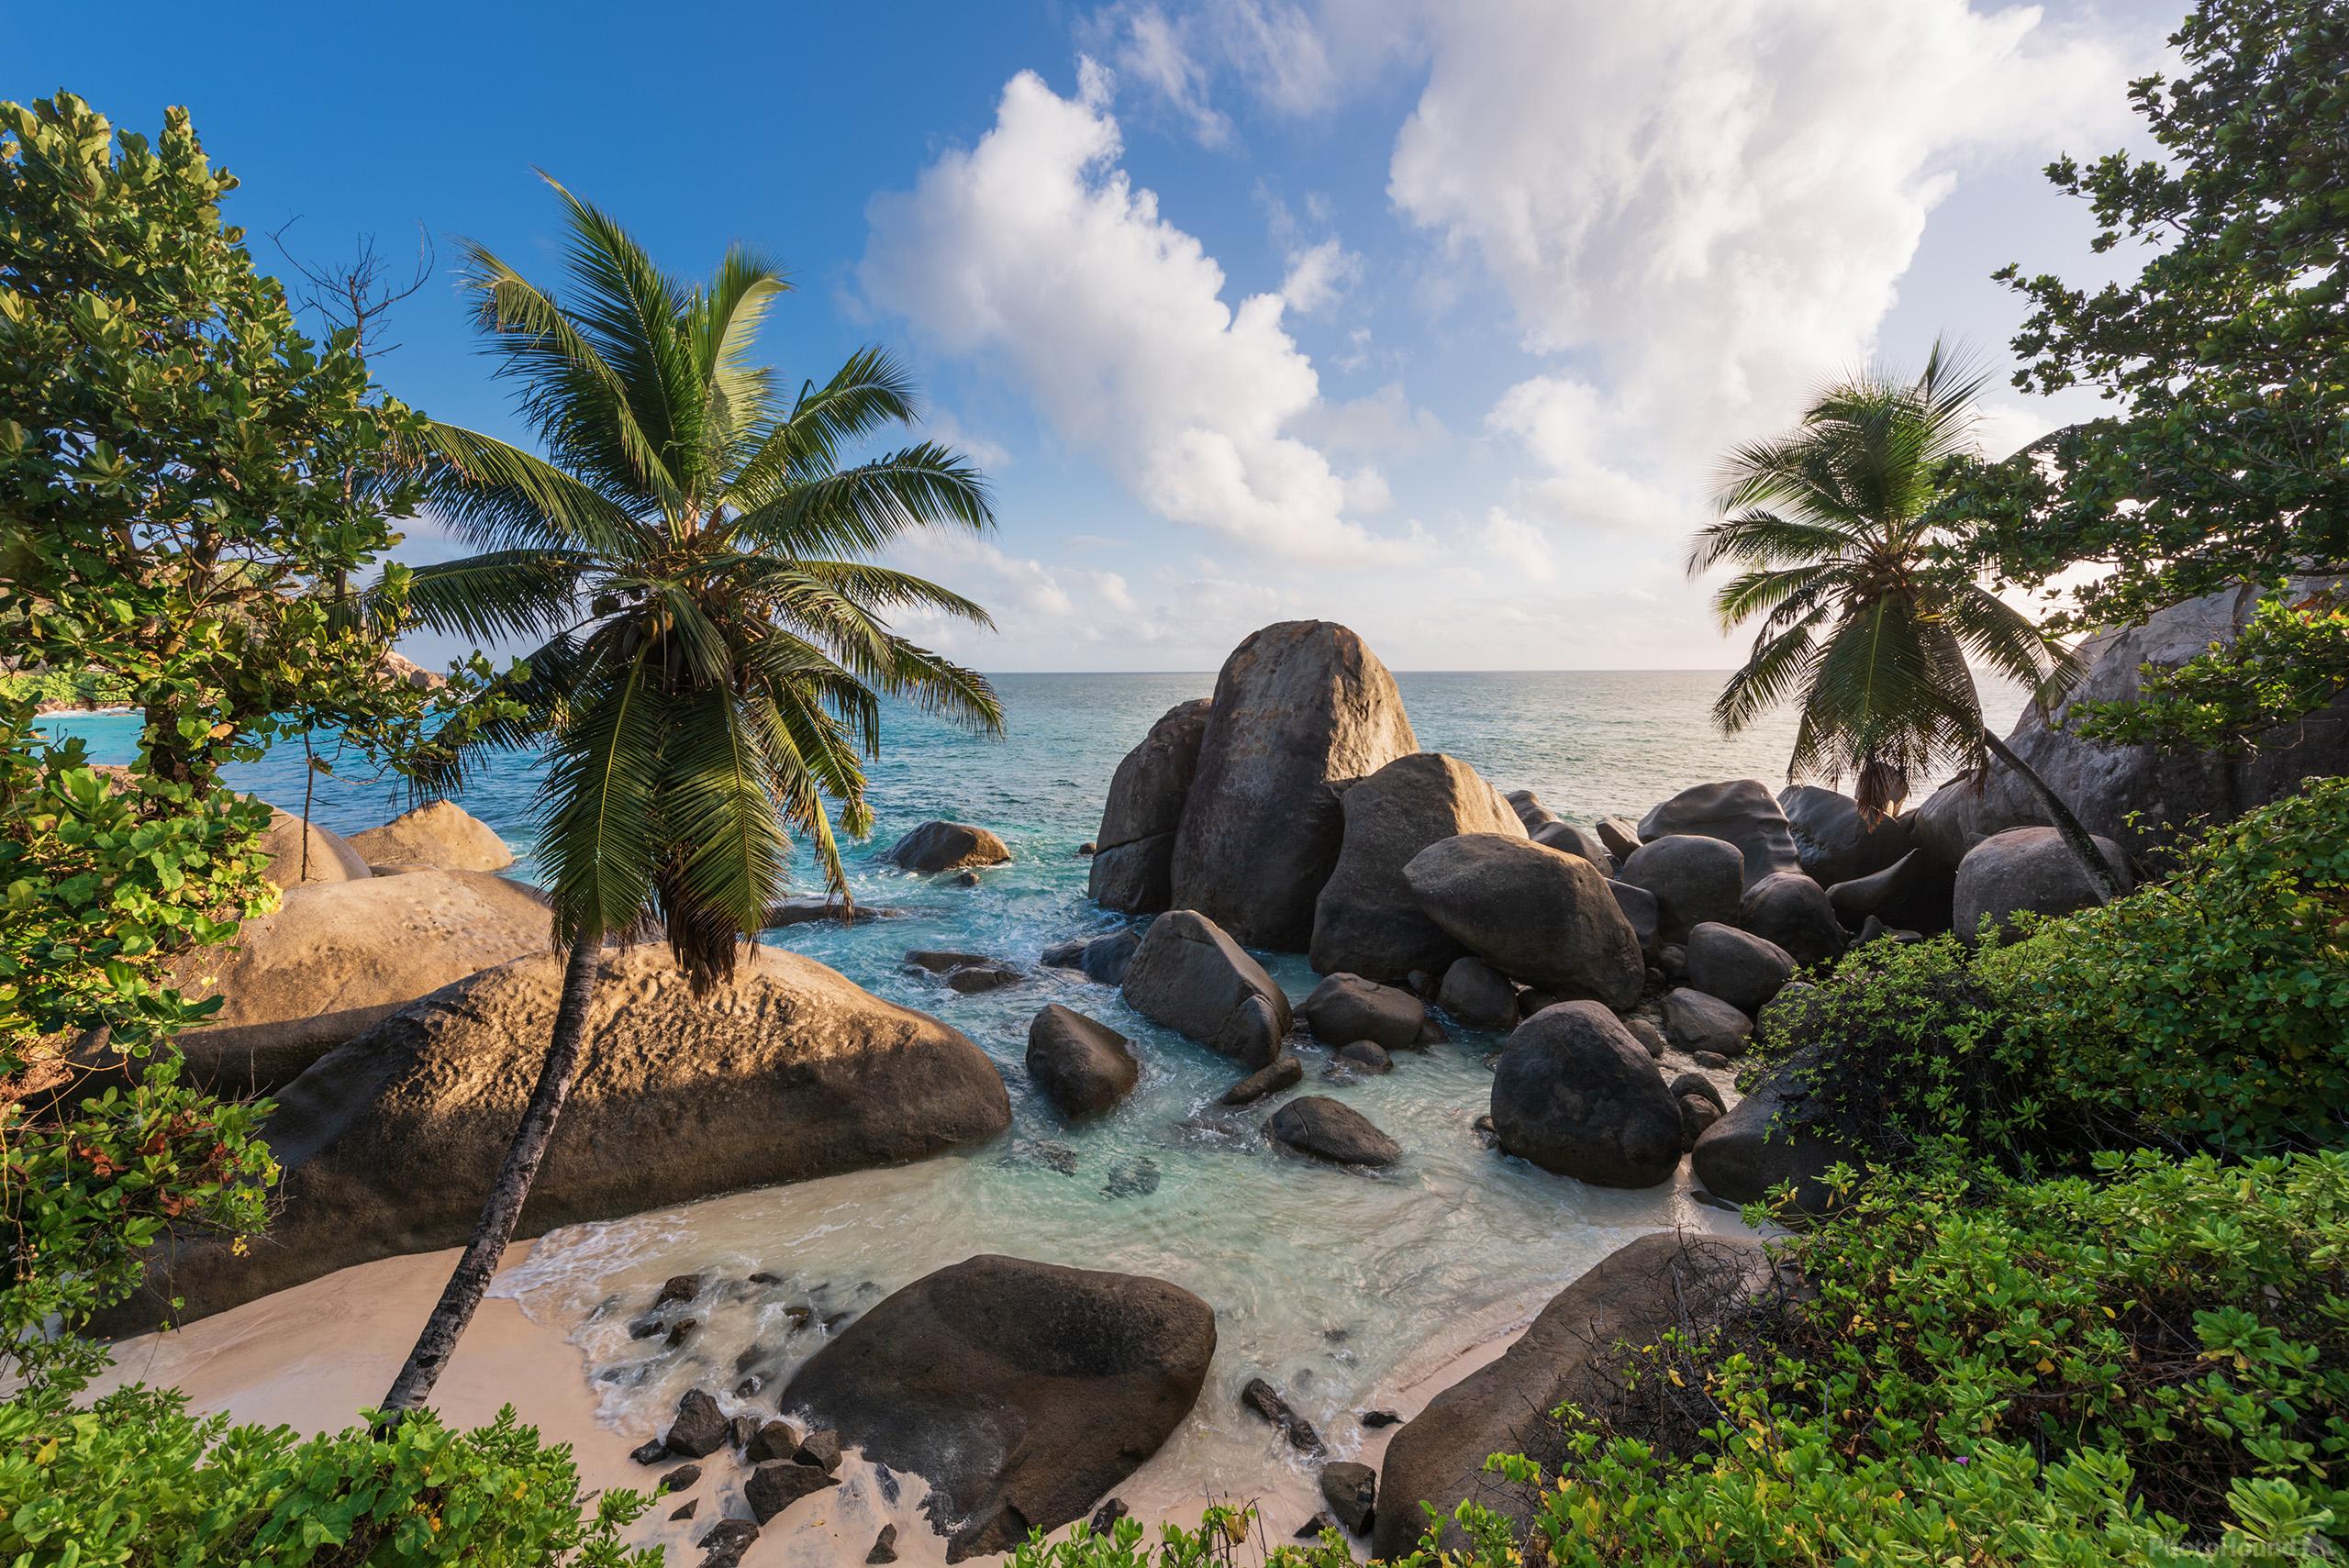 Seychelles photo locations